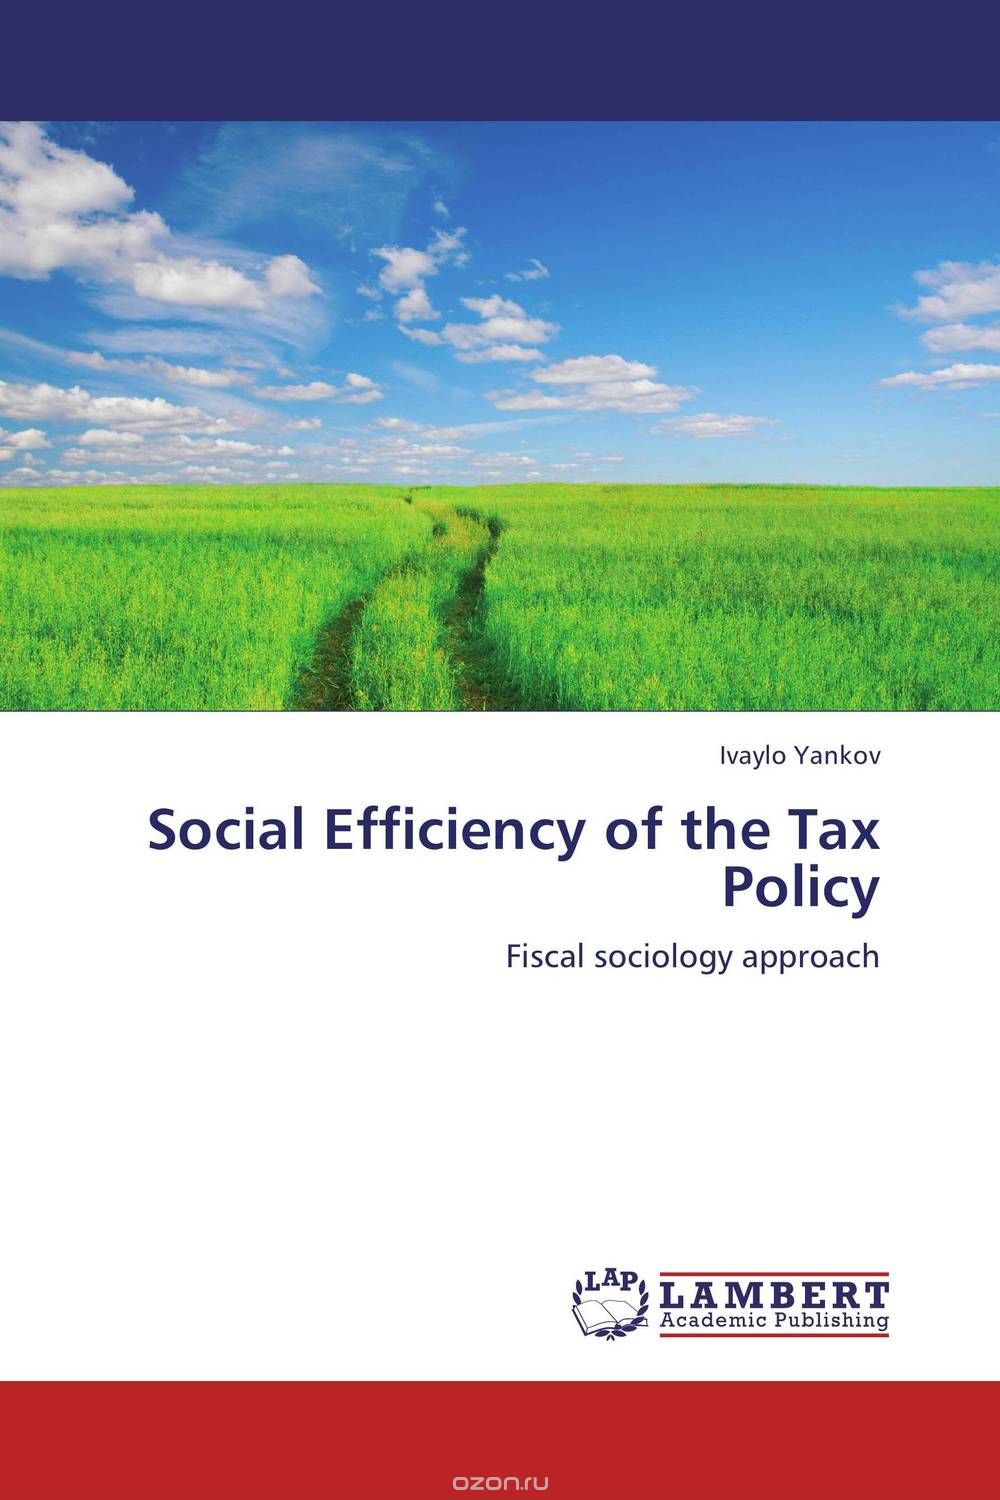 Скачать книгу "Social Efficiency of the Tax Policy"